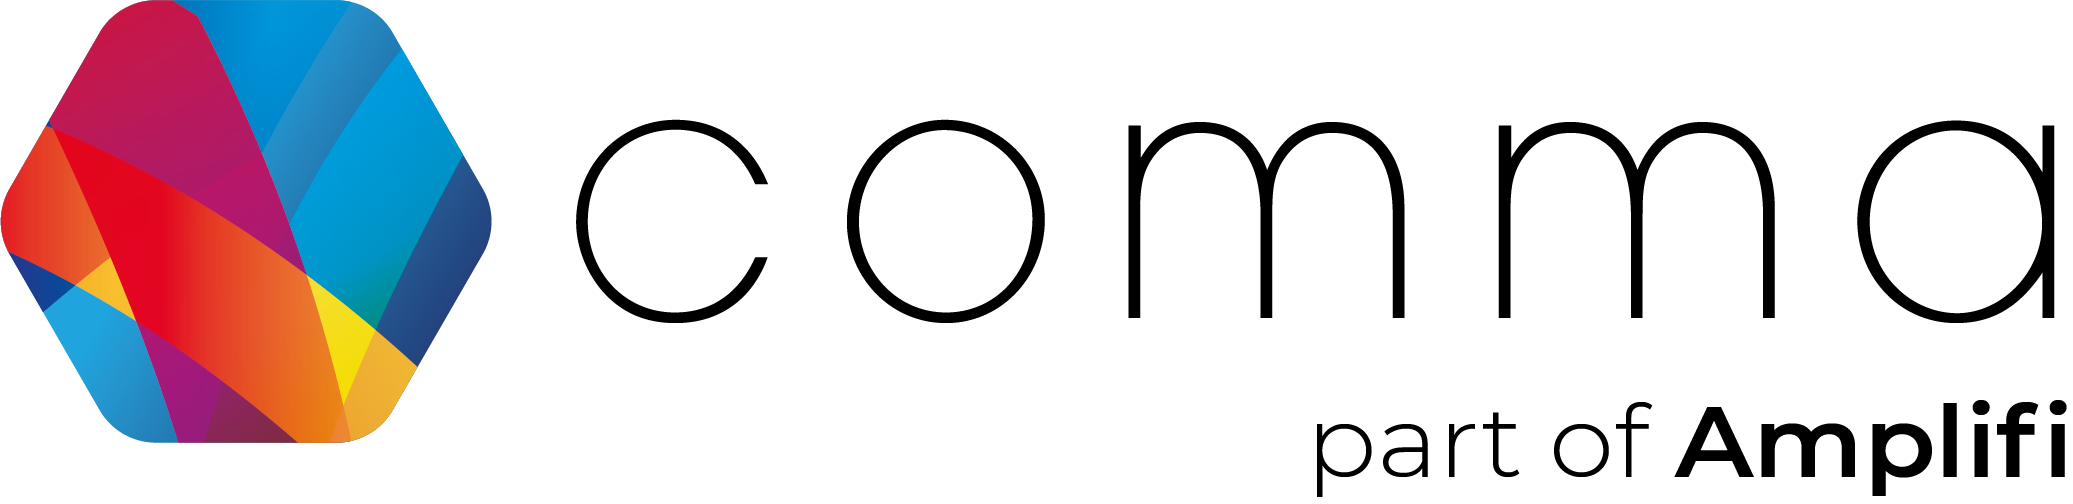 Comma group logo